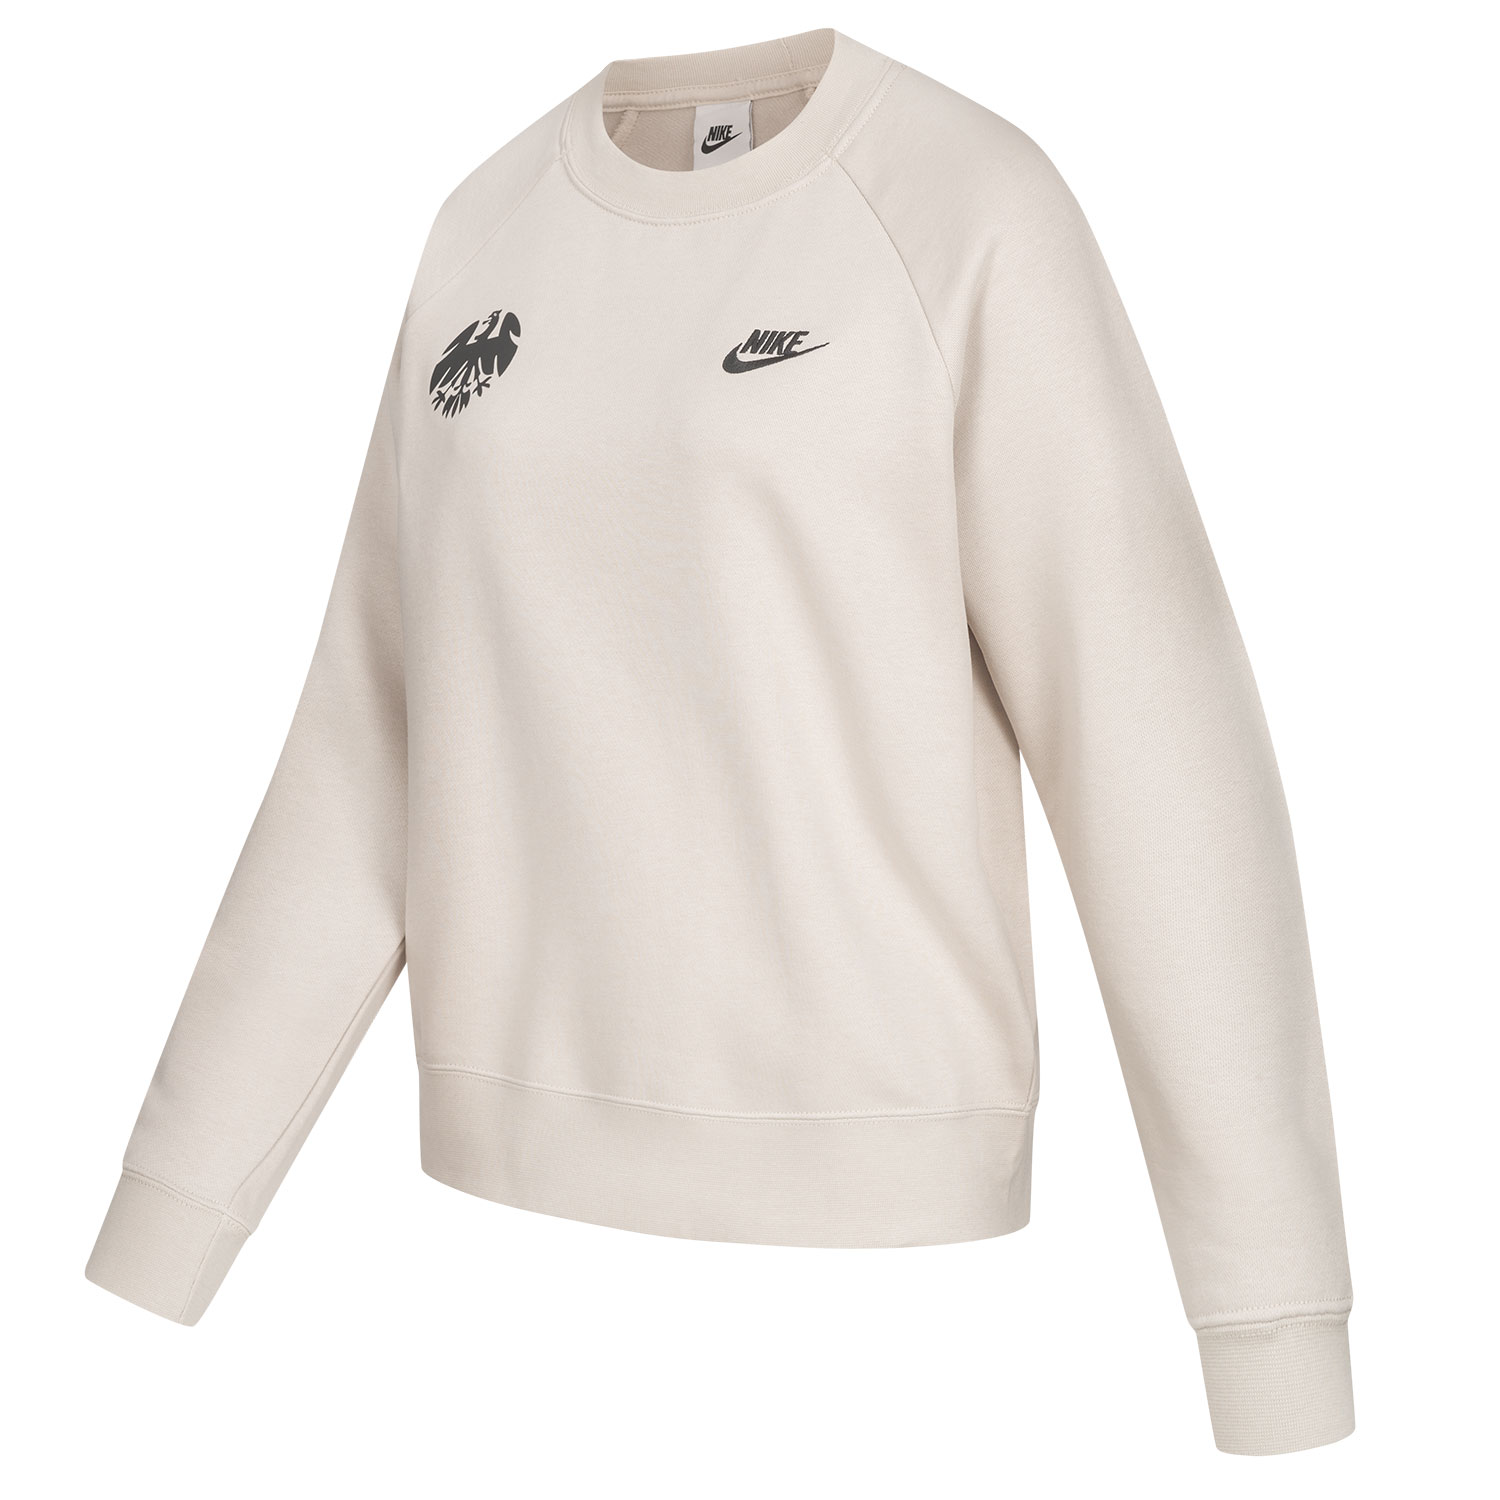 Bild 3: Nike Damen Sweater New Eighties